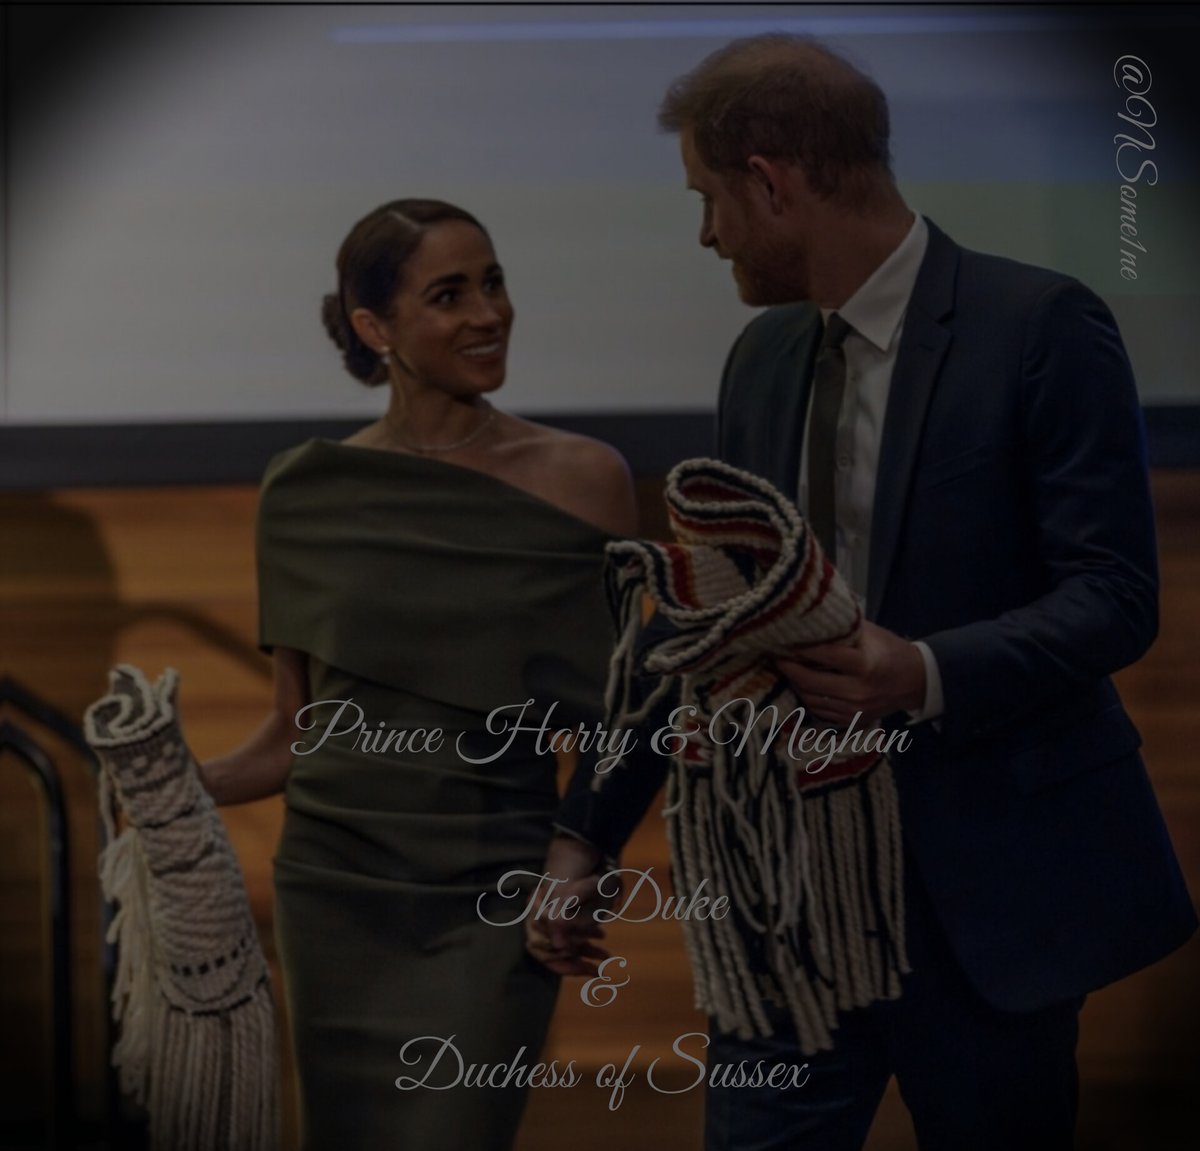 THE DUKE & DUCHESS OF SUSSEX.  

I love that picture of #HarryAndMeghan.

#PrinceHarry  ❤️
#DuchessMeghan ❤️
#PrinceArchie ❤️
#PrincessLili ❤️
#LoveWins 
#StrongLove